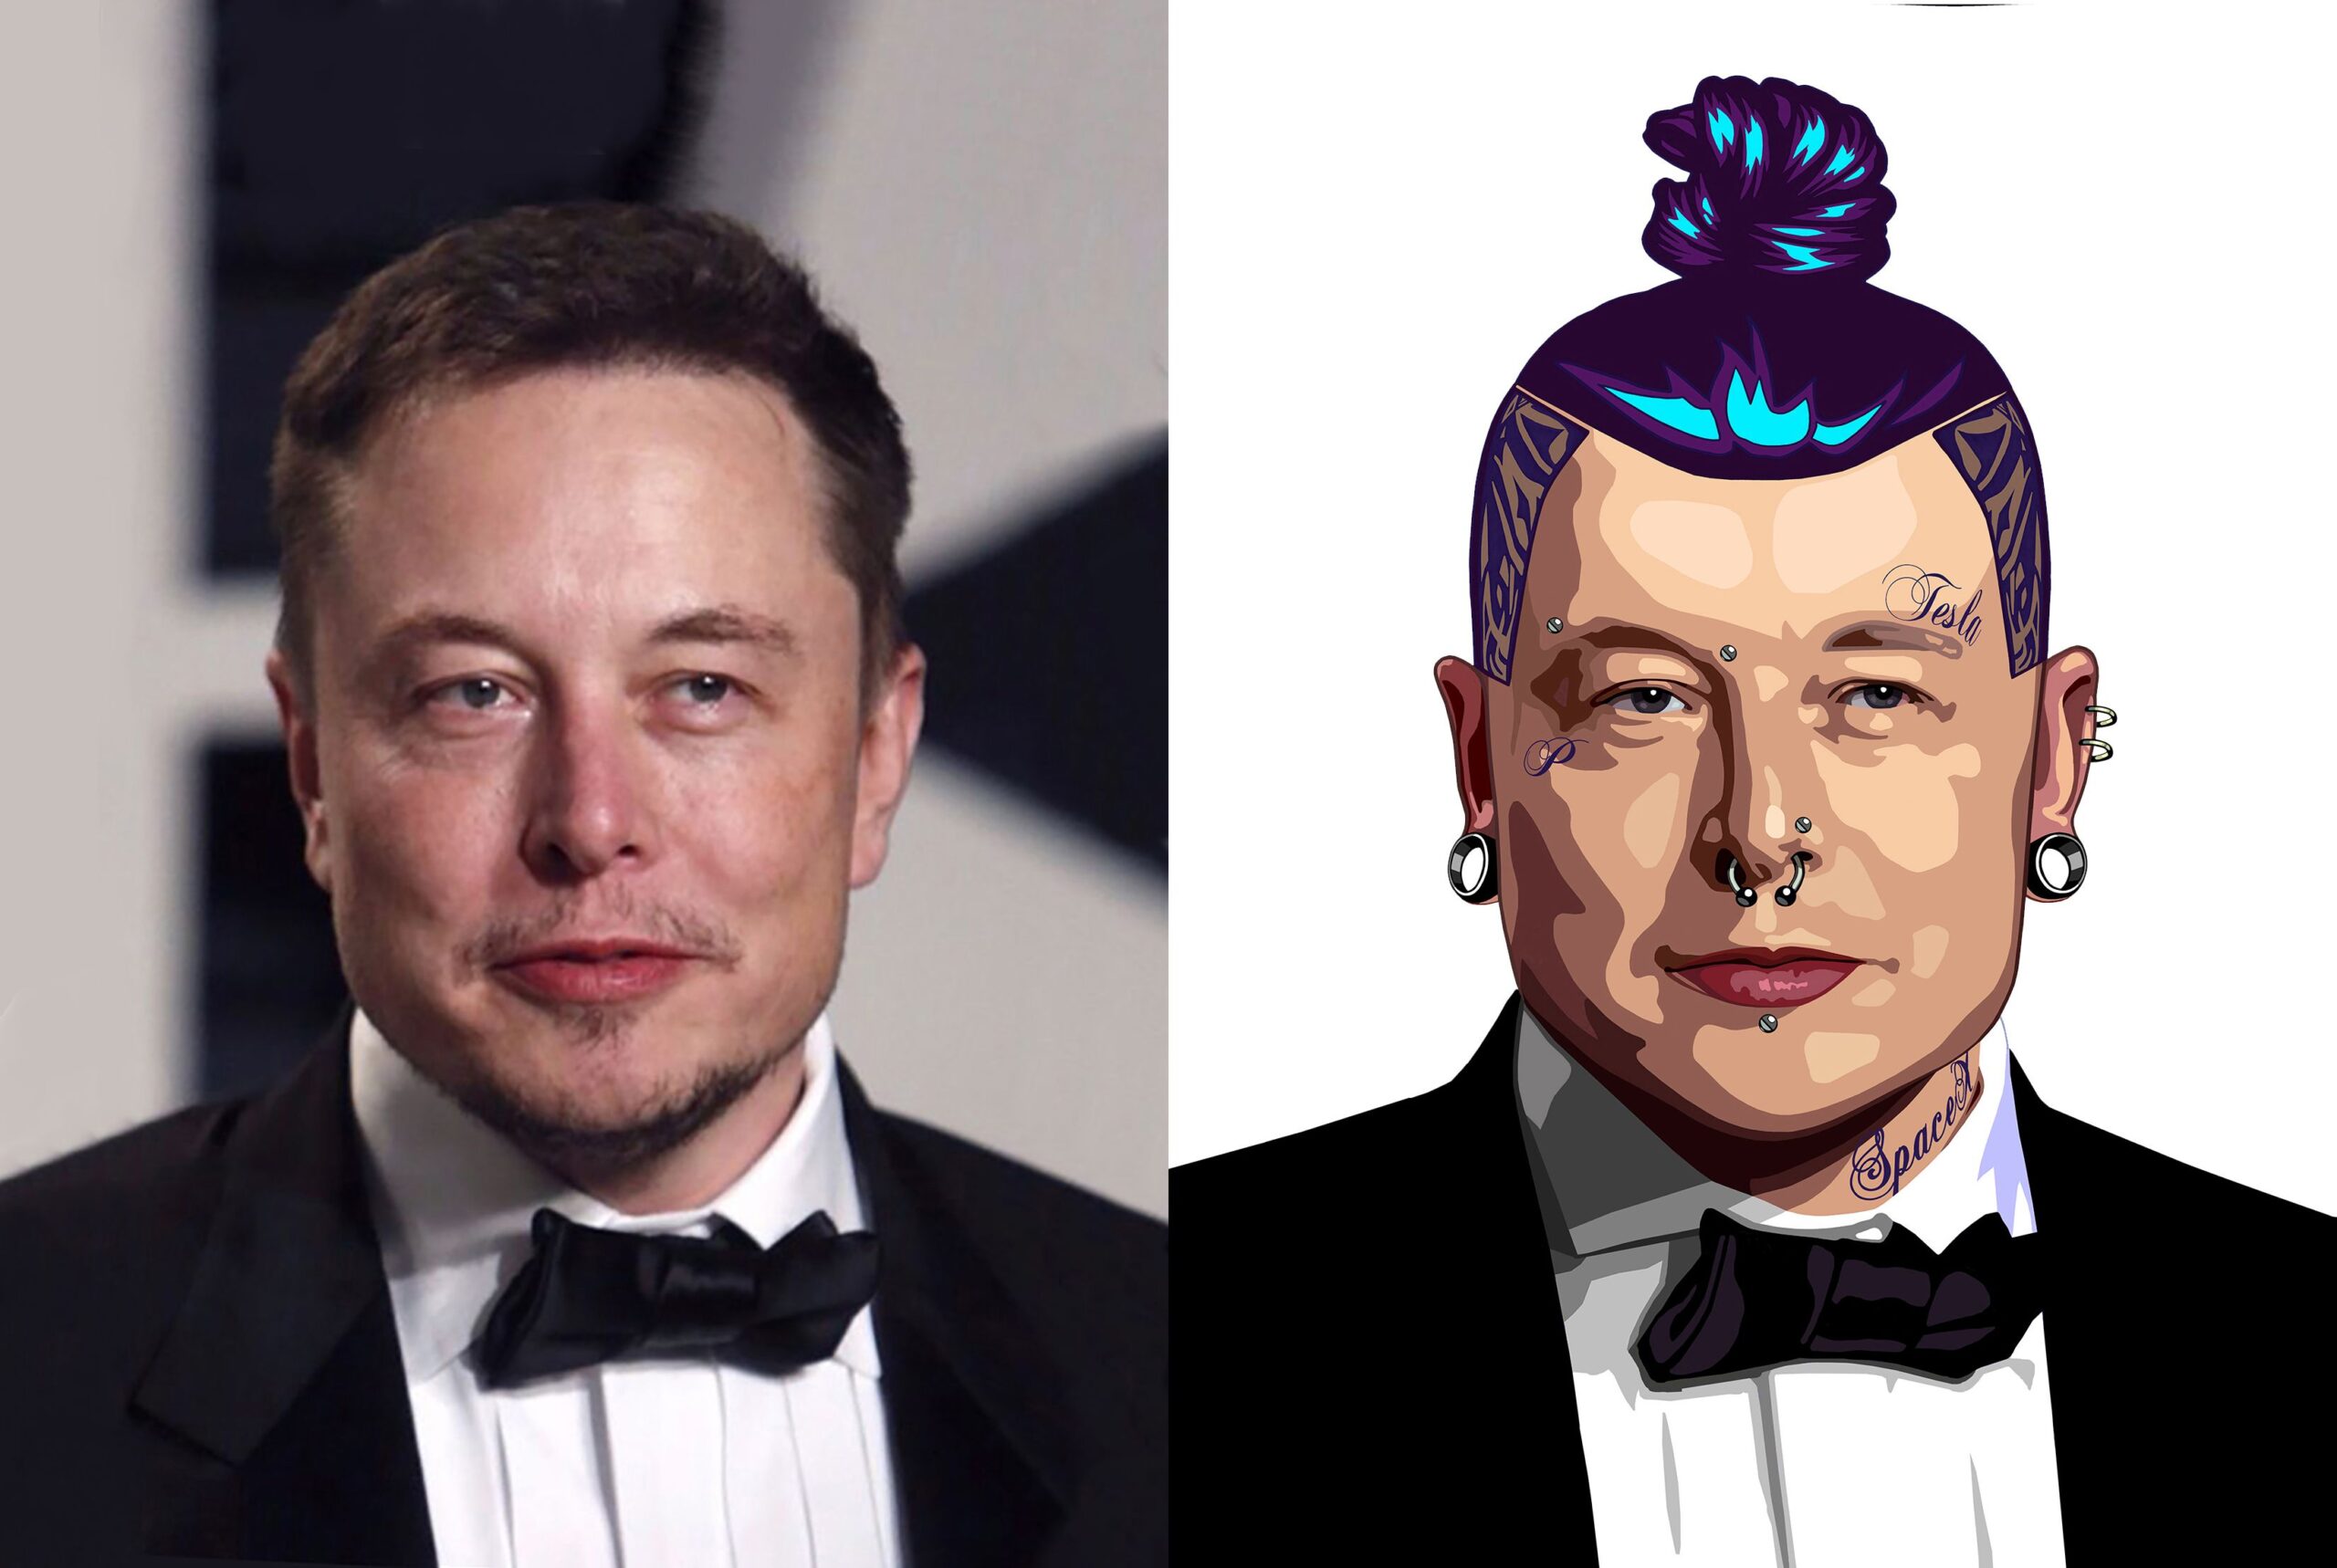 Elon Musk Alternative Digital Portrait